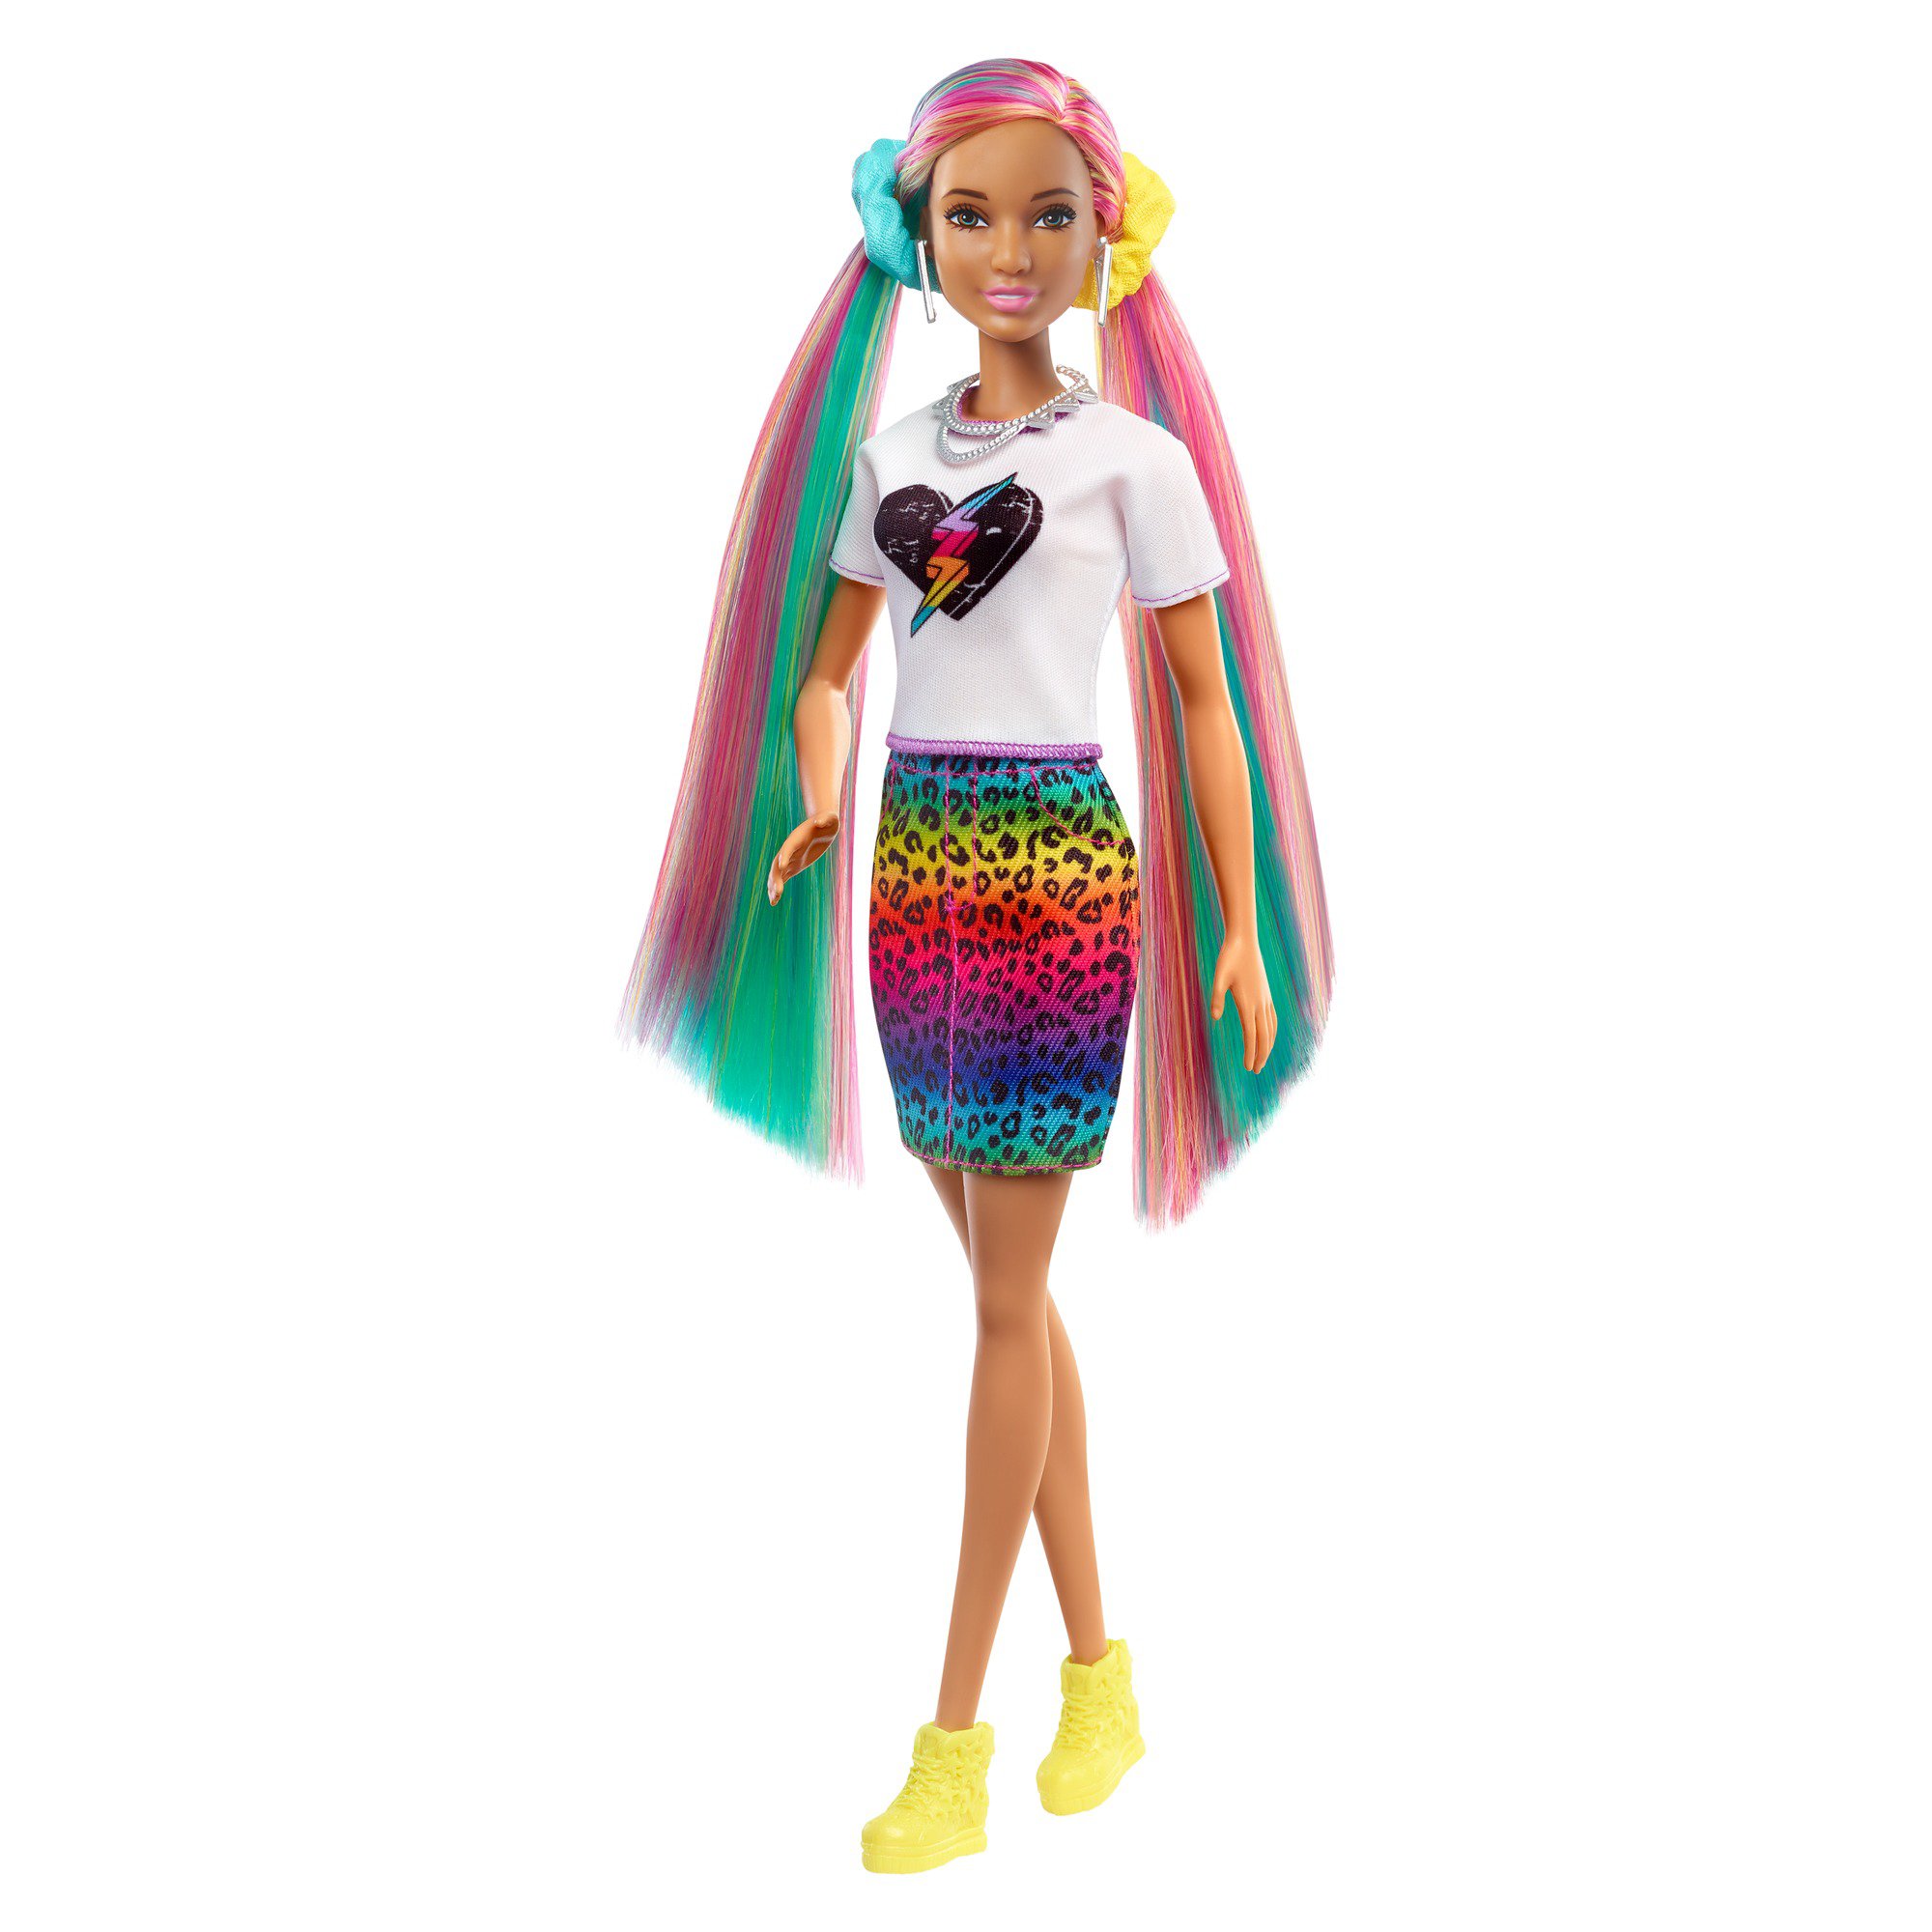 Barbie Rainbow Hair Doll - Shop Action Figures & Dolls at H-E-B